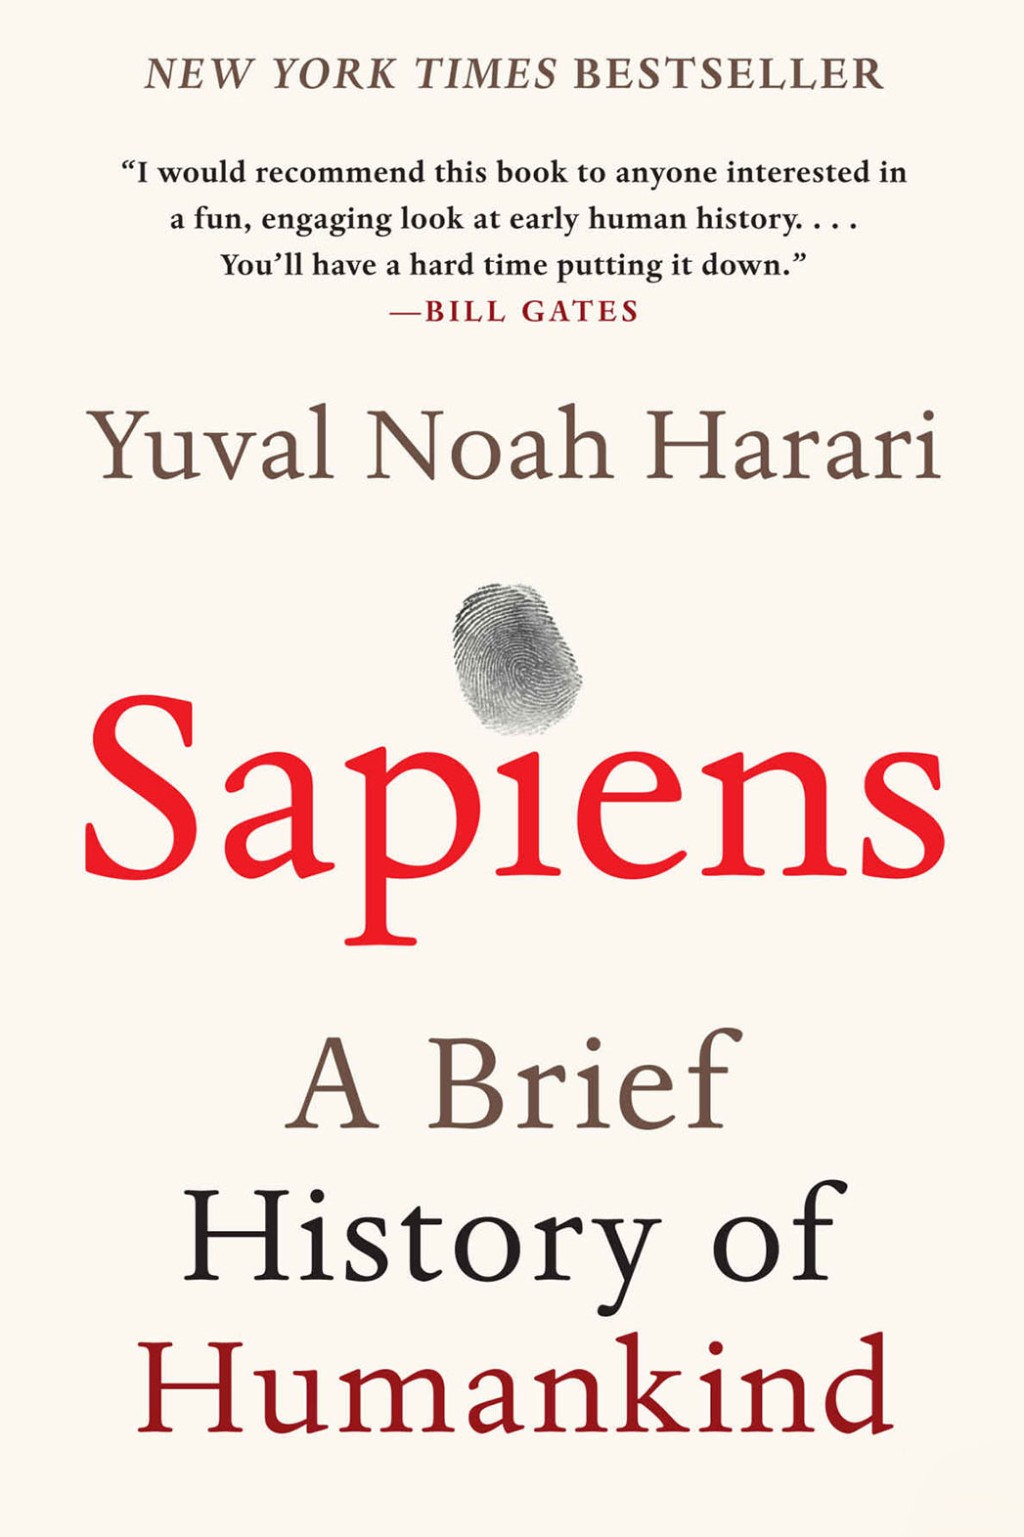 Sapiens: A Brief History of Humankind by Yuval Noah Harari